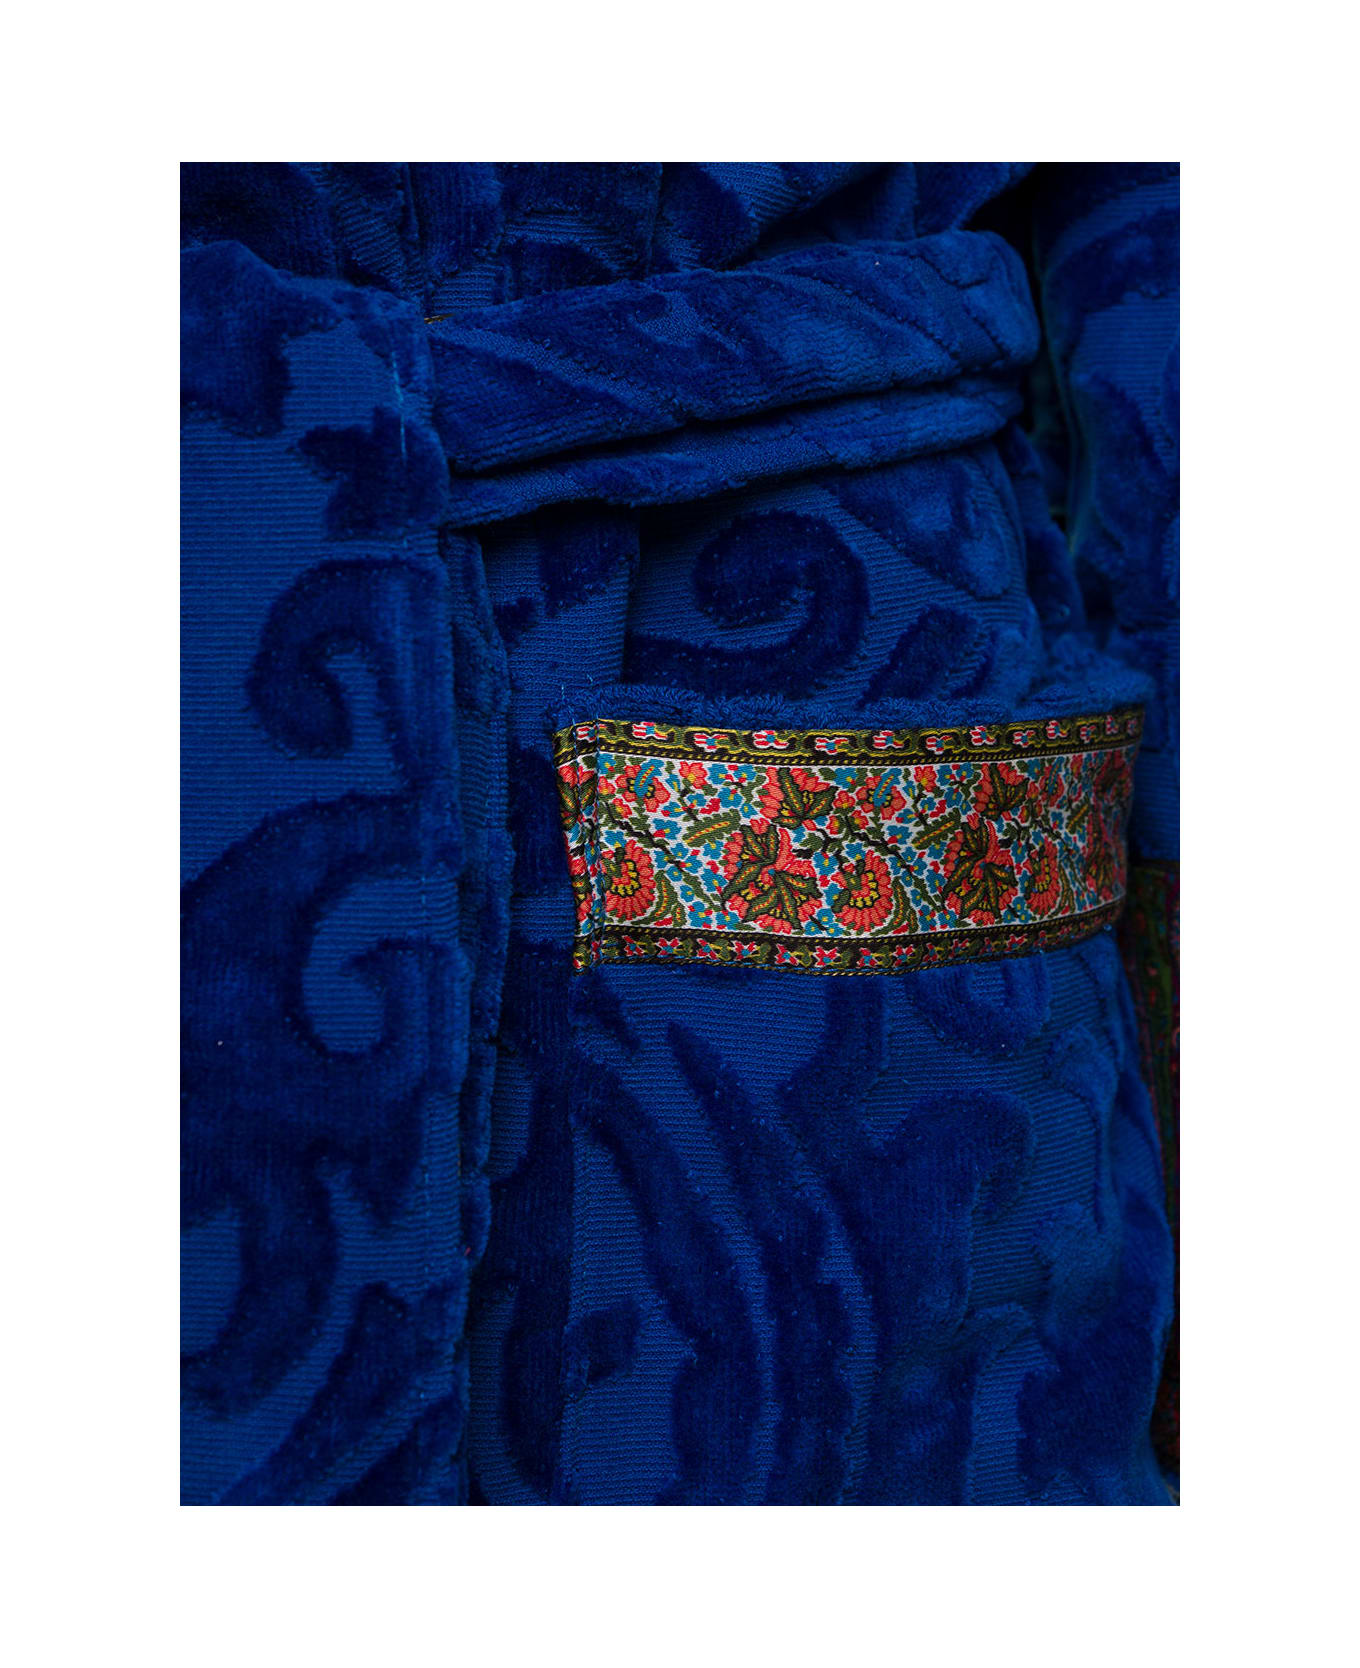 Etro 'new Tradition' Blue Hooded Bath Robe With Ornamental Print Etro Home - Blu 水着